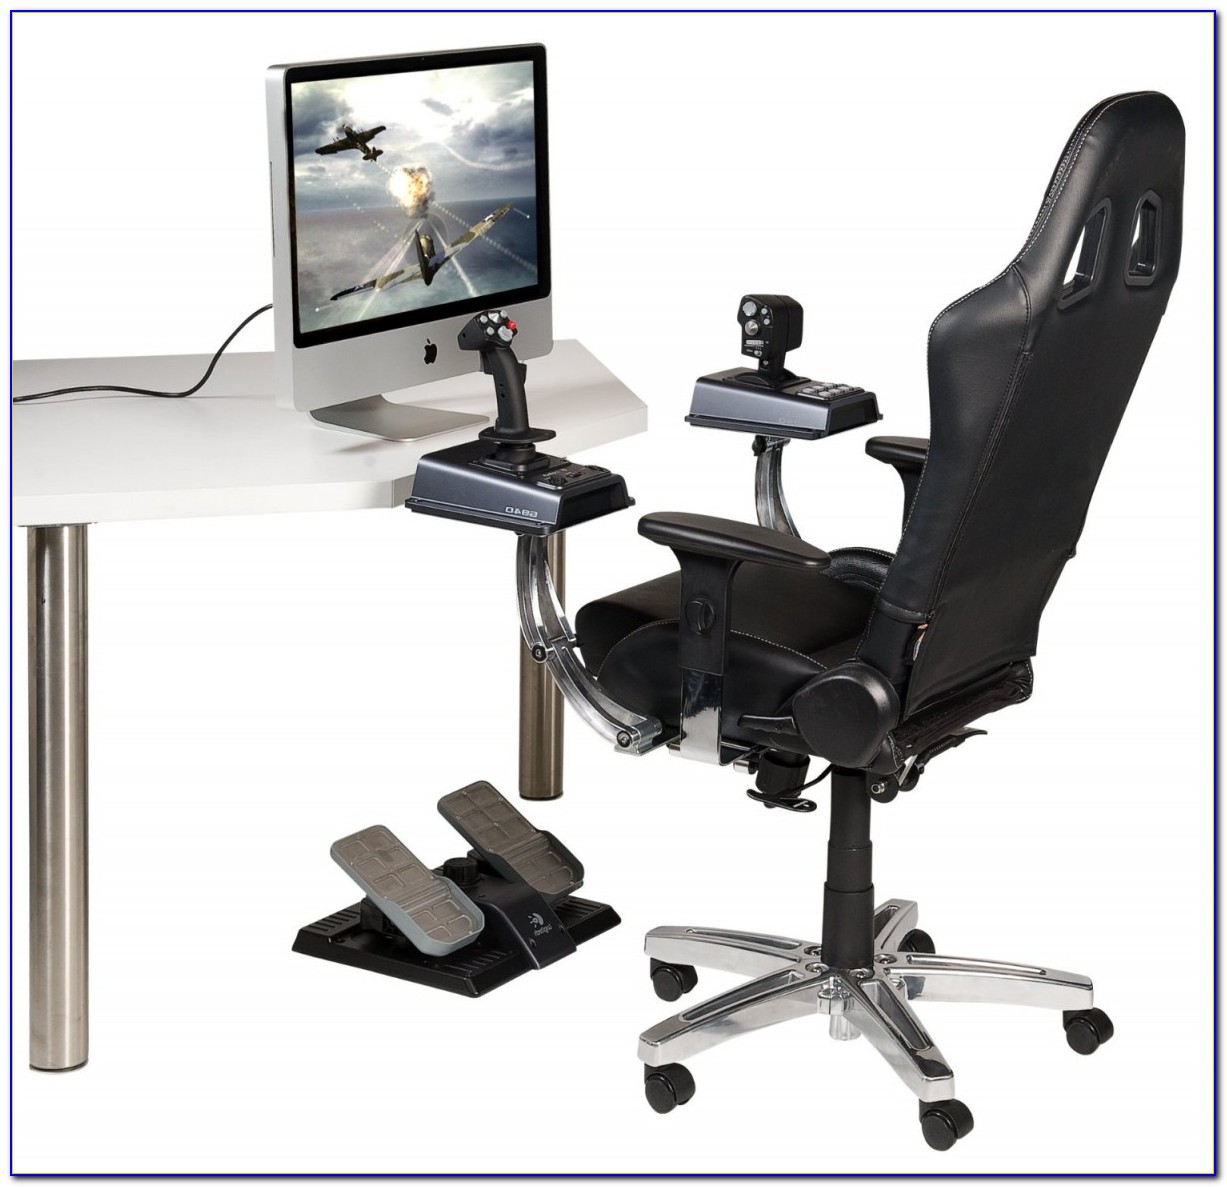 Best Office Chair For Back Pain Staples - Desk : Home Design Ideas #